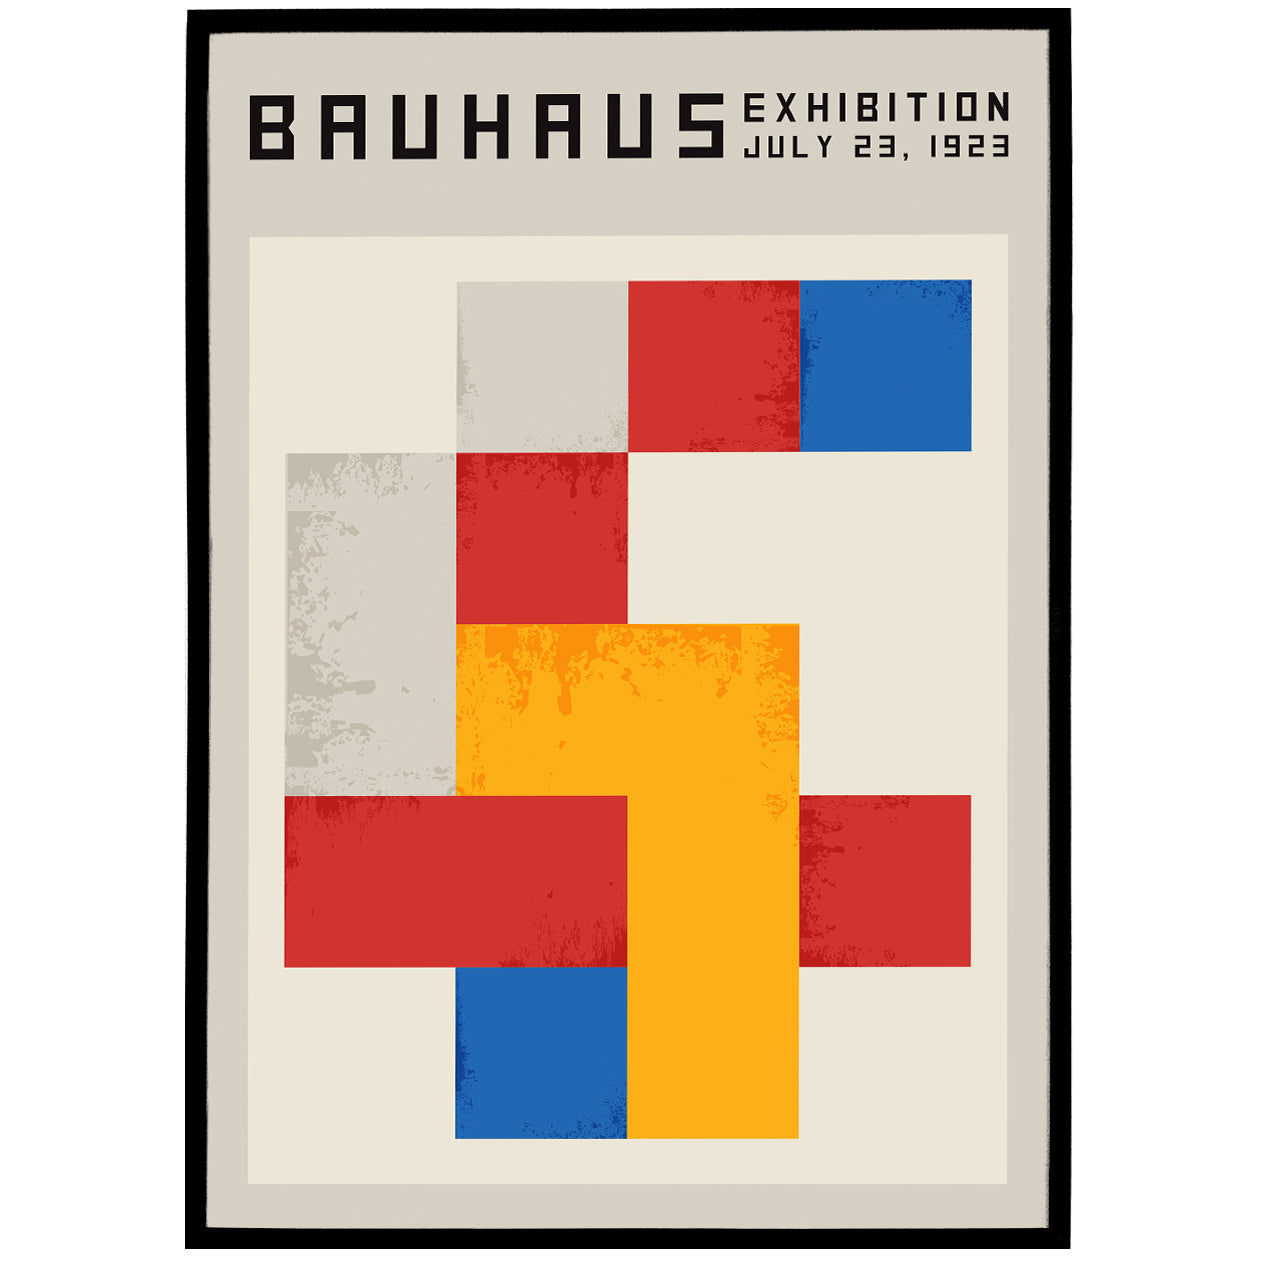 Retro Bauhaus Poster